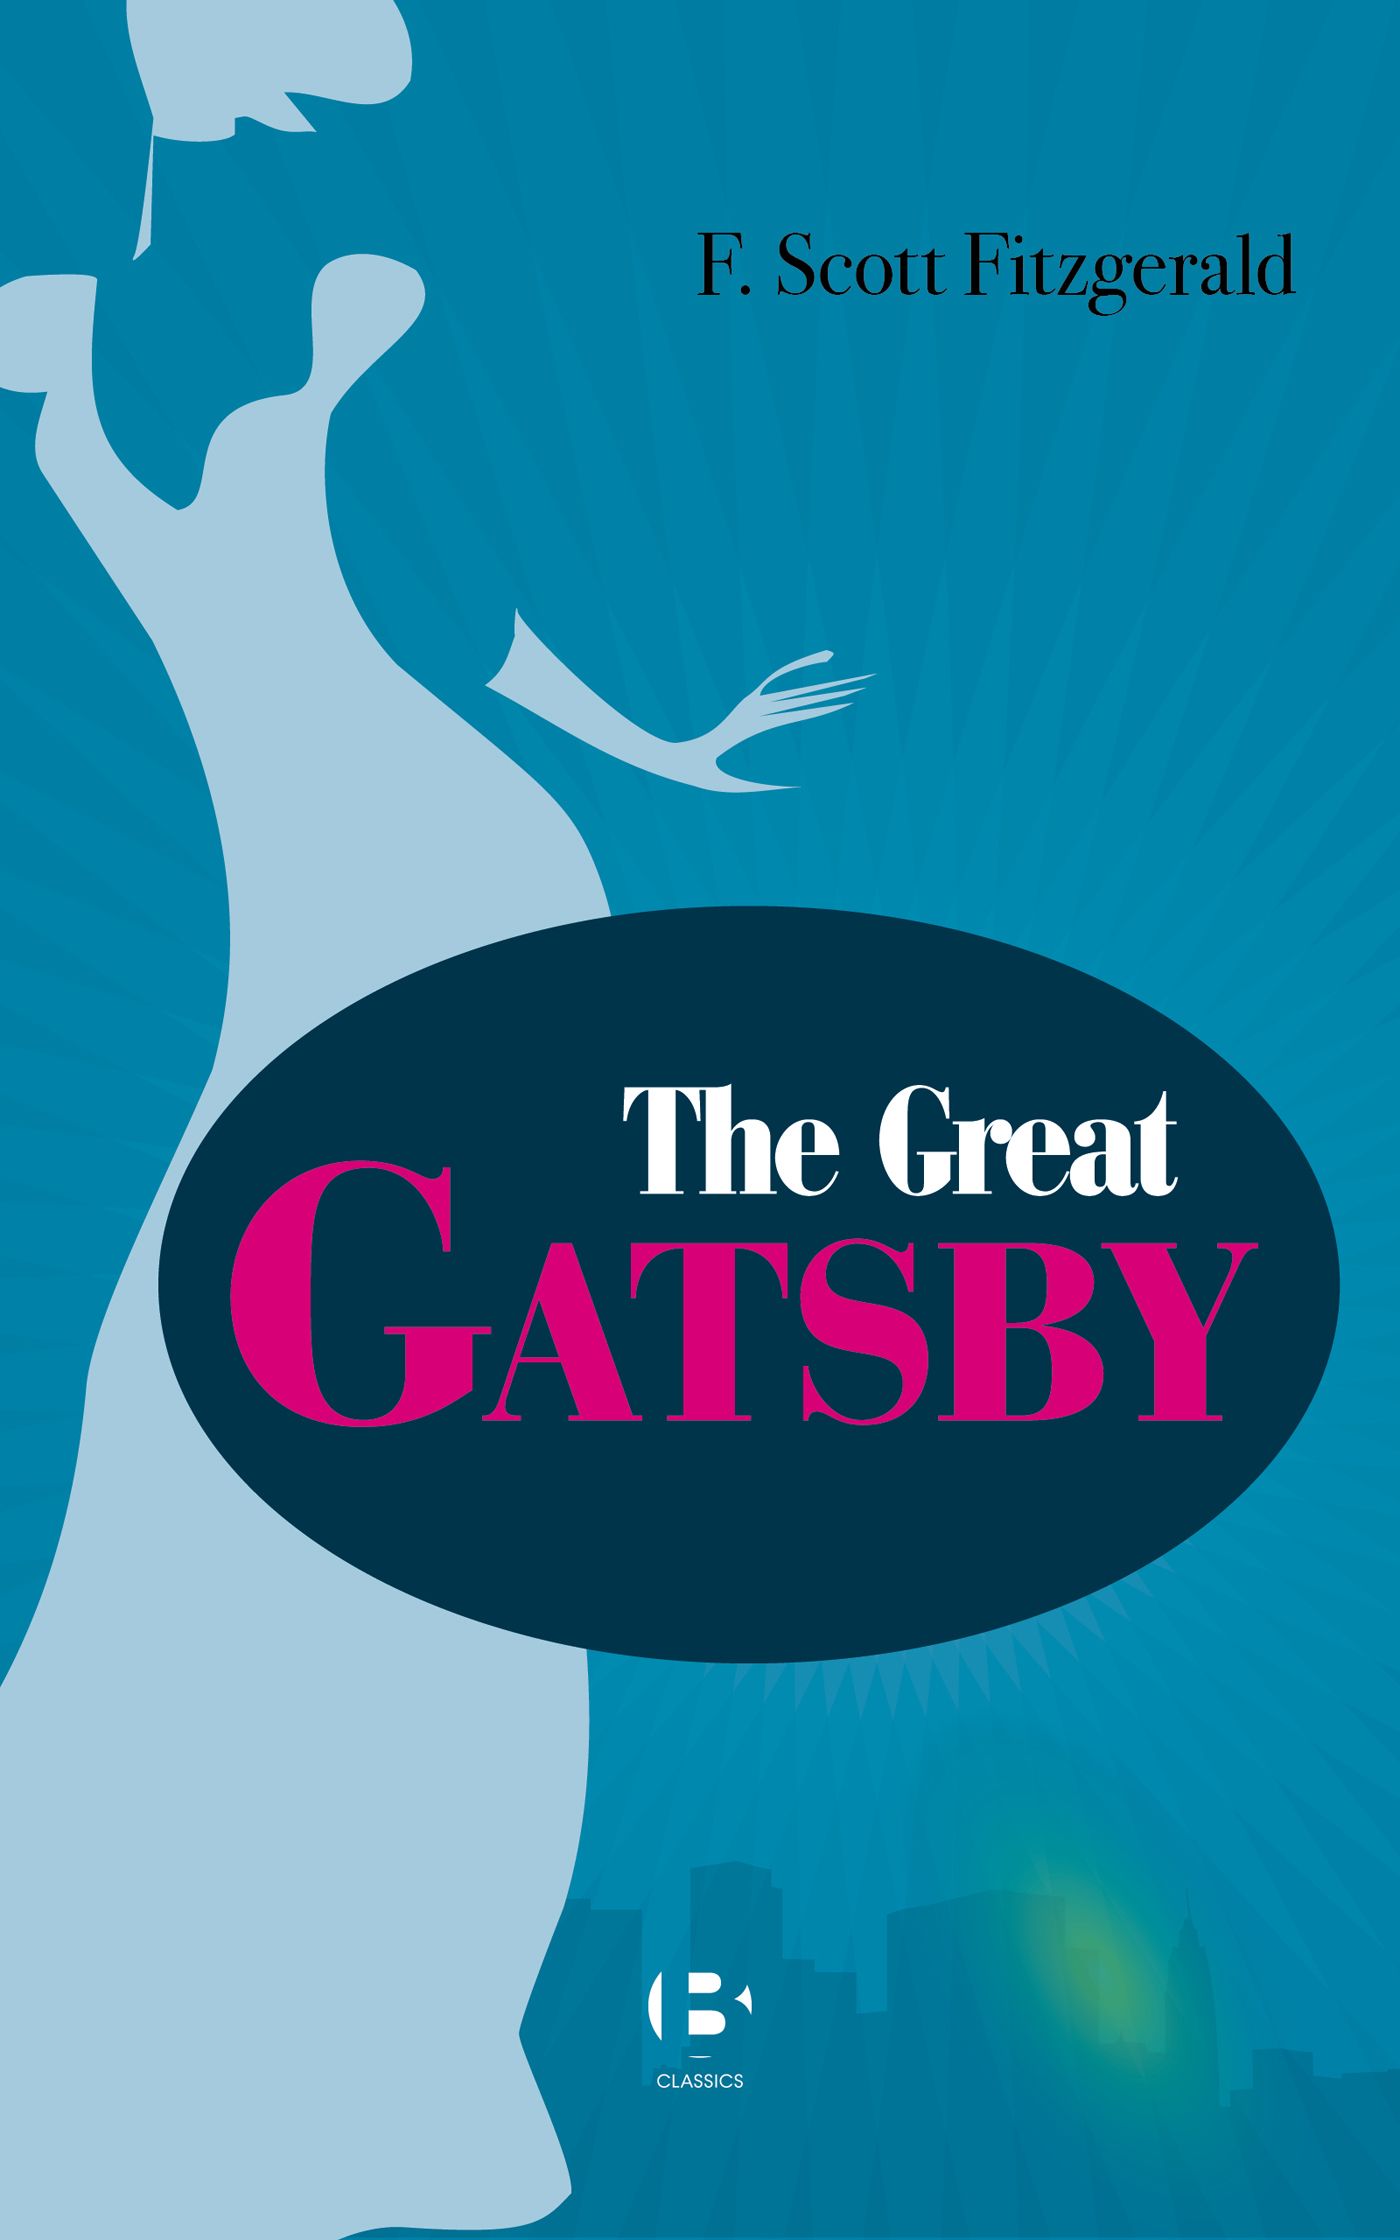 The Great Gatsby, eBook by F. Scott Fitzgerald